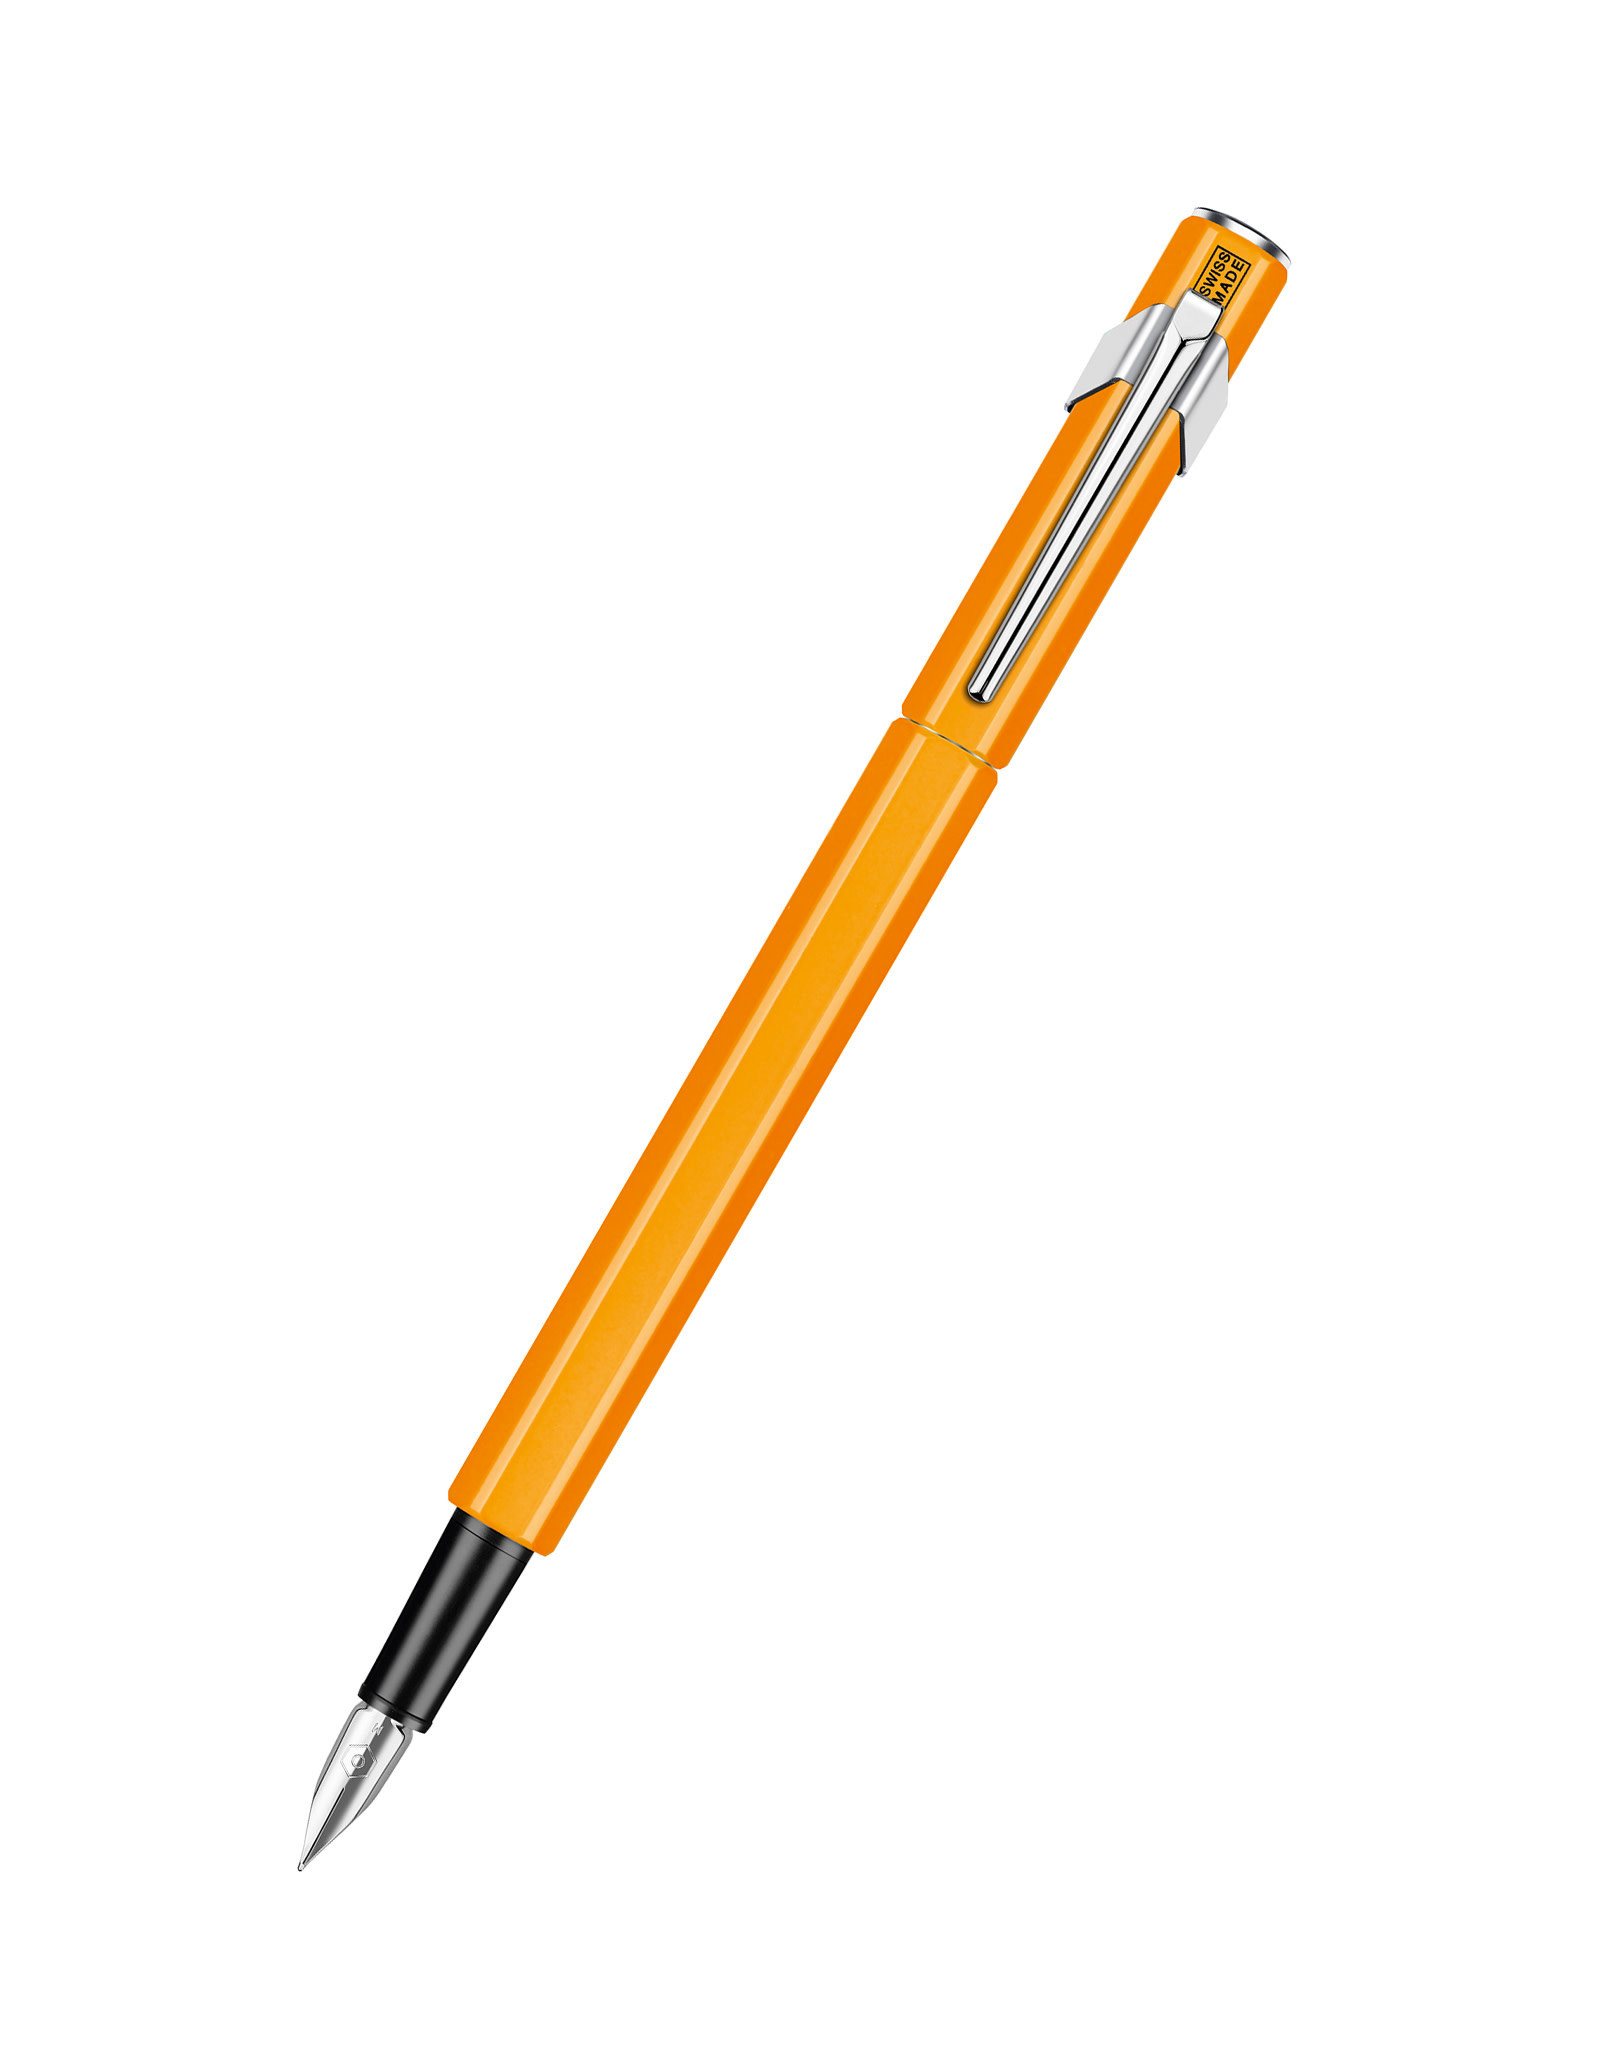 Caran d'Ache Caran D’Ache 849 Fountain Pen, Fluorescent Orange (EF)